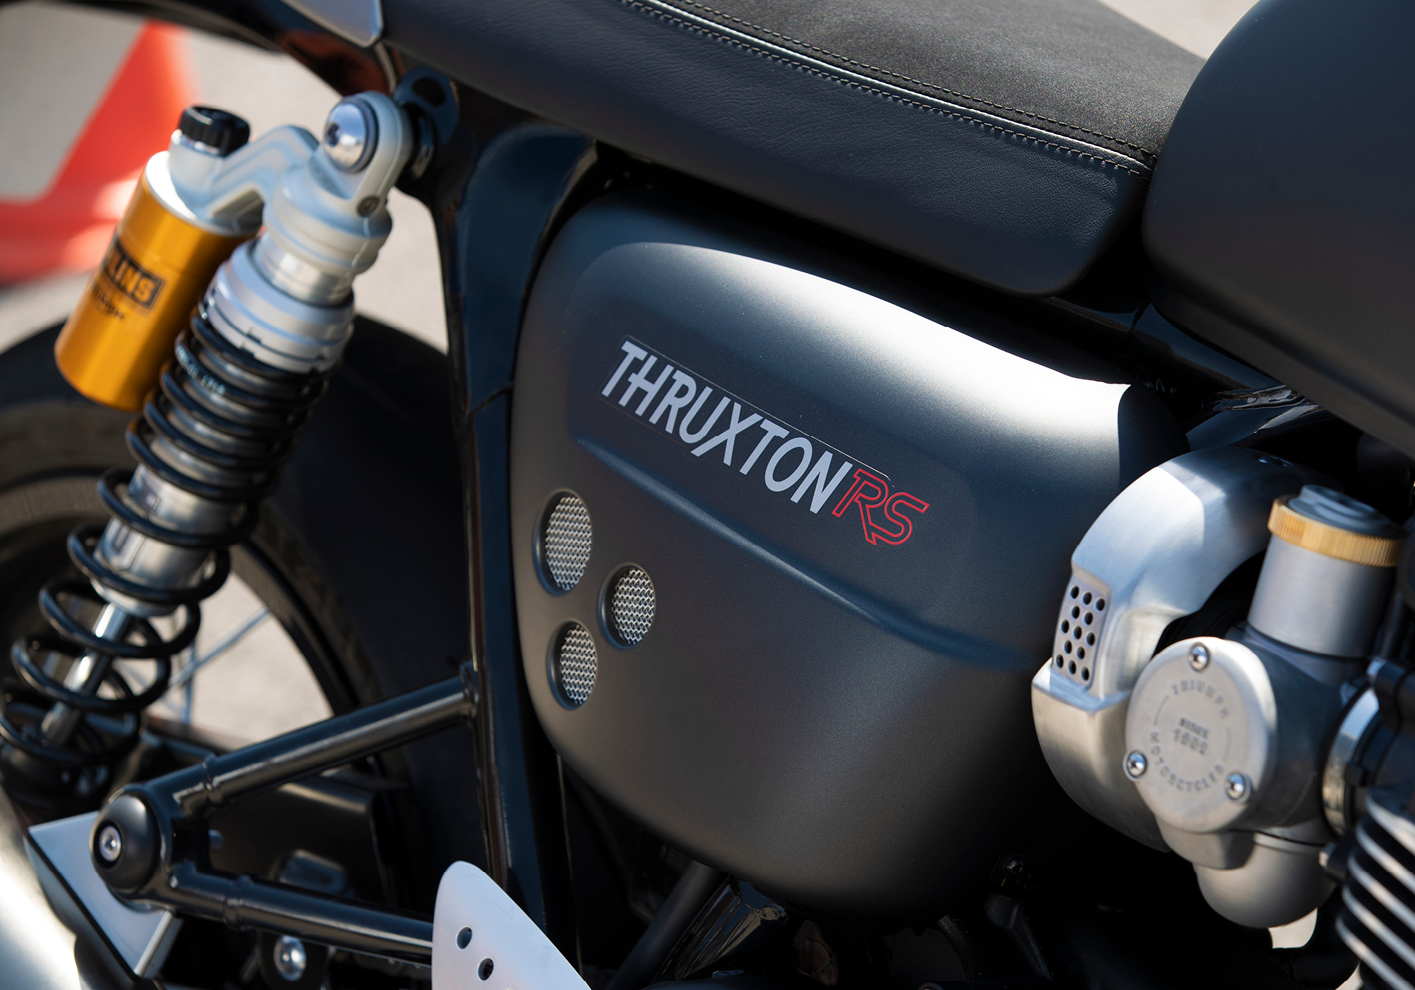 Details on the Triumph Thruxton RS